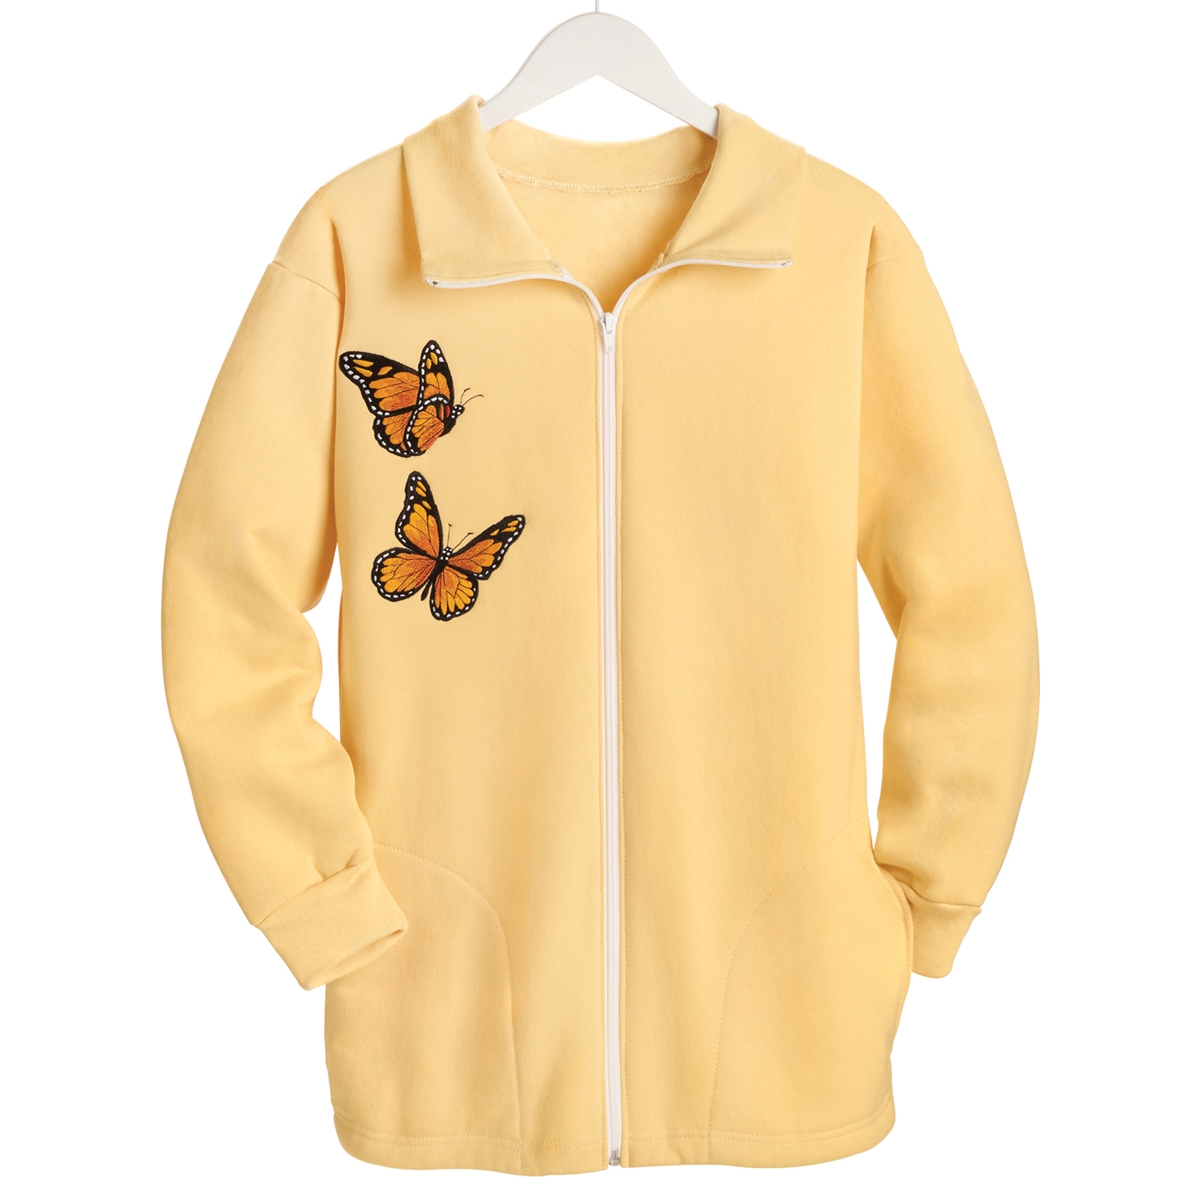 Monarch Butterfly Cardigan